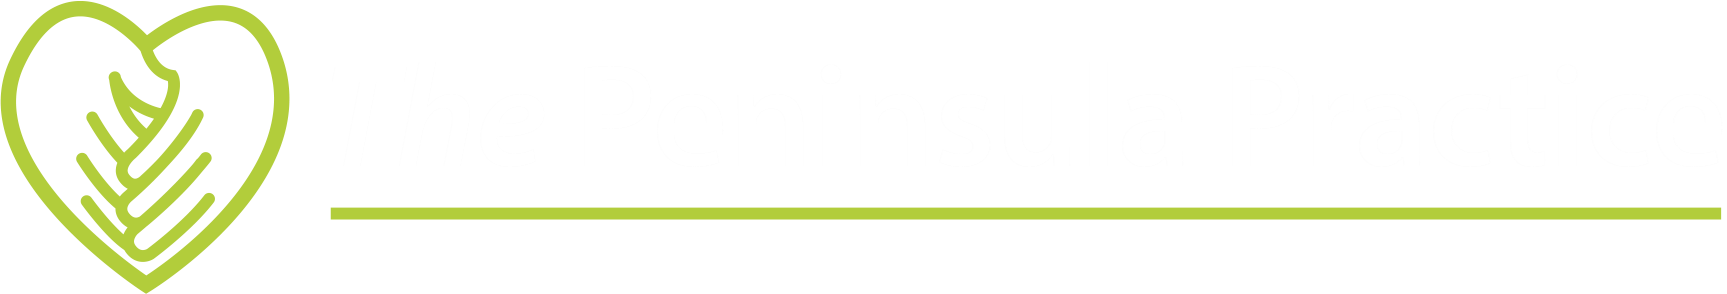 The Peninsula Practice Logo